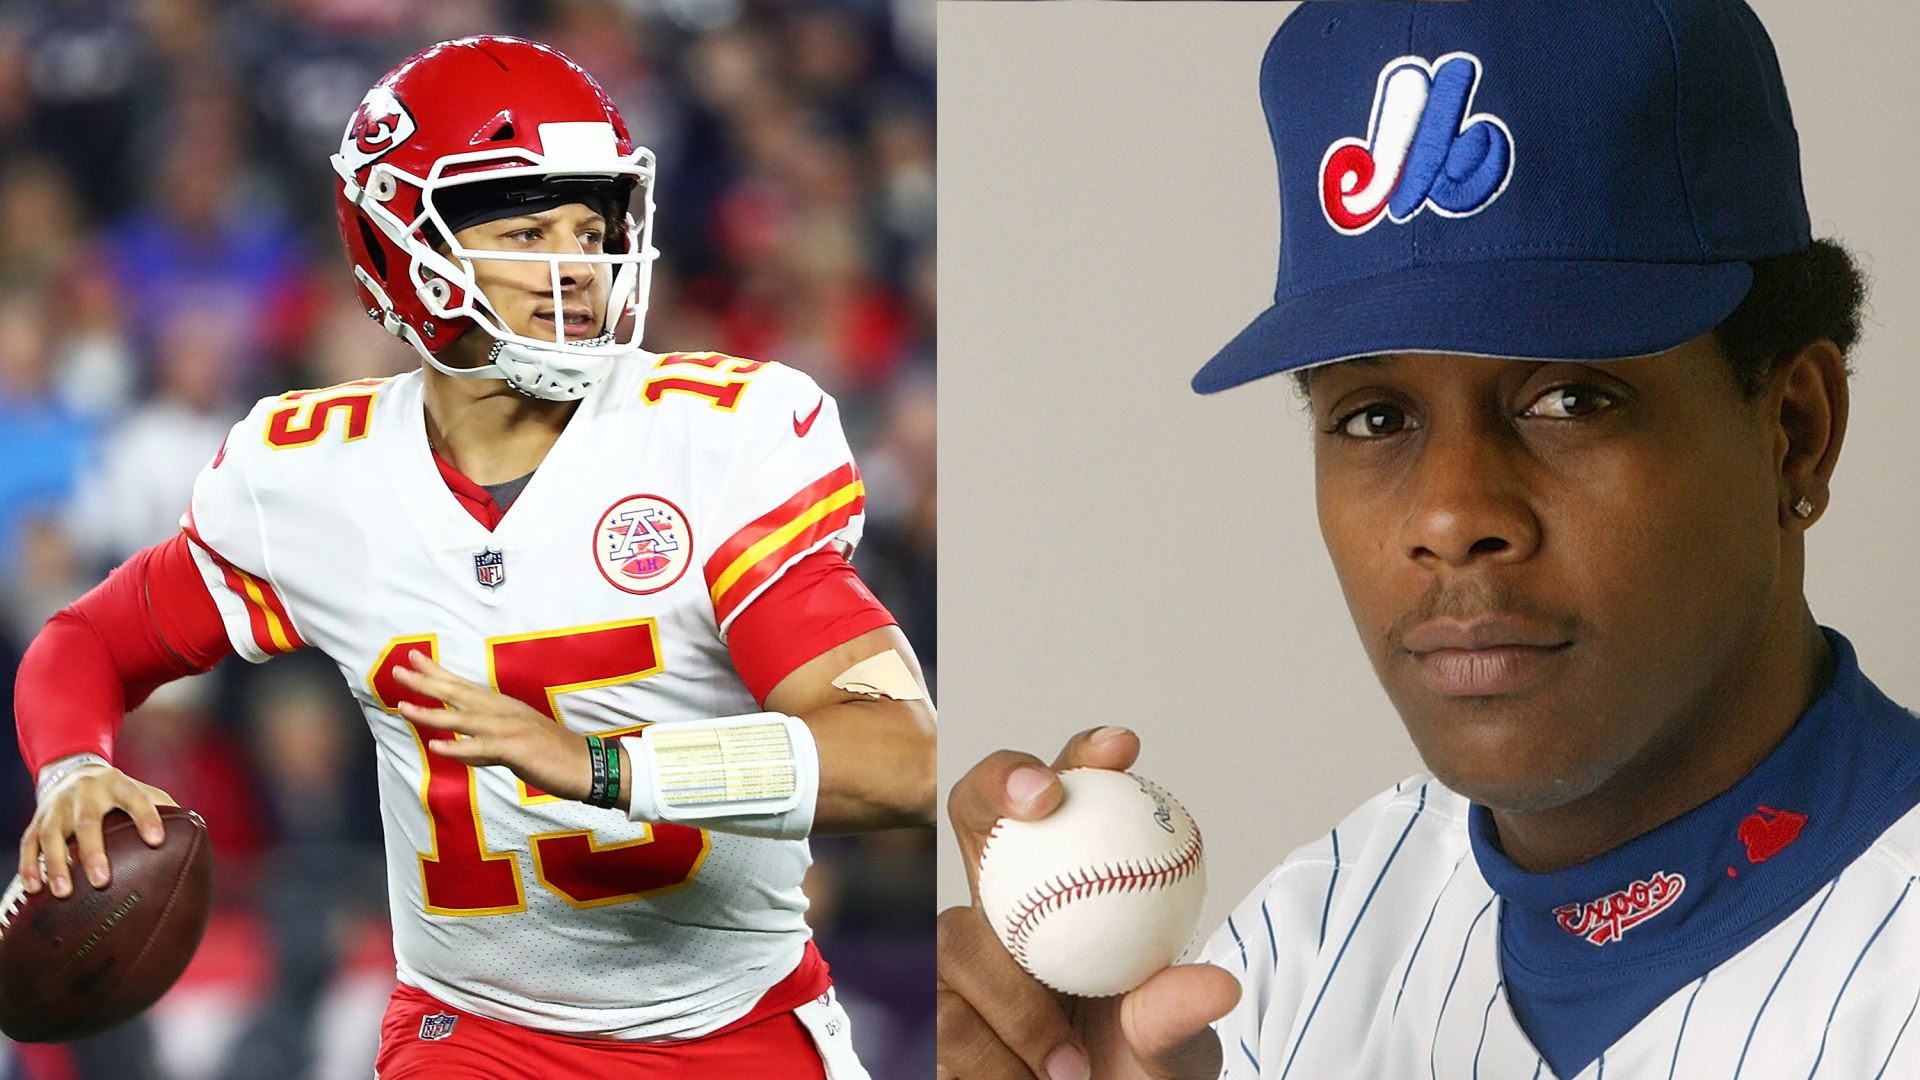 Flipboard: Kansas City Chiefs' Patrick Mahomes influenced by MLB childhood